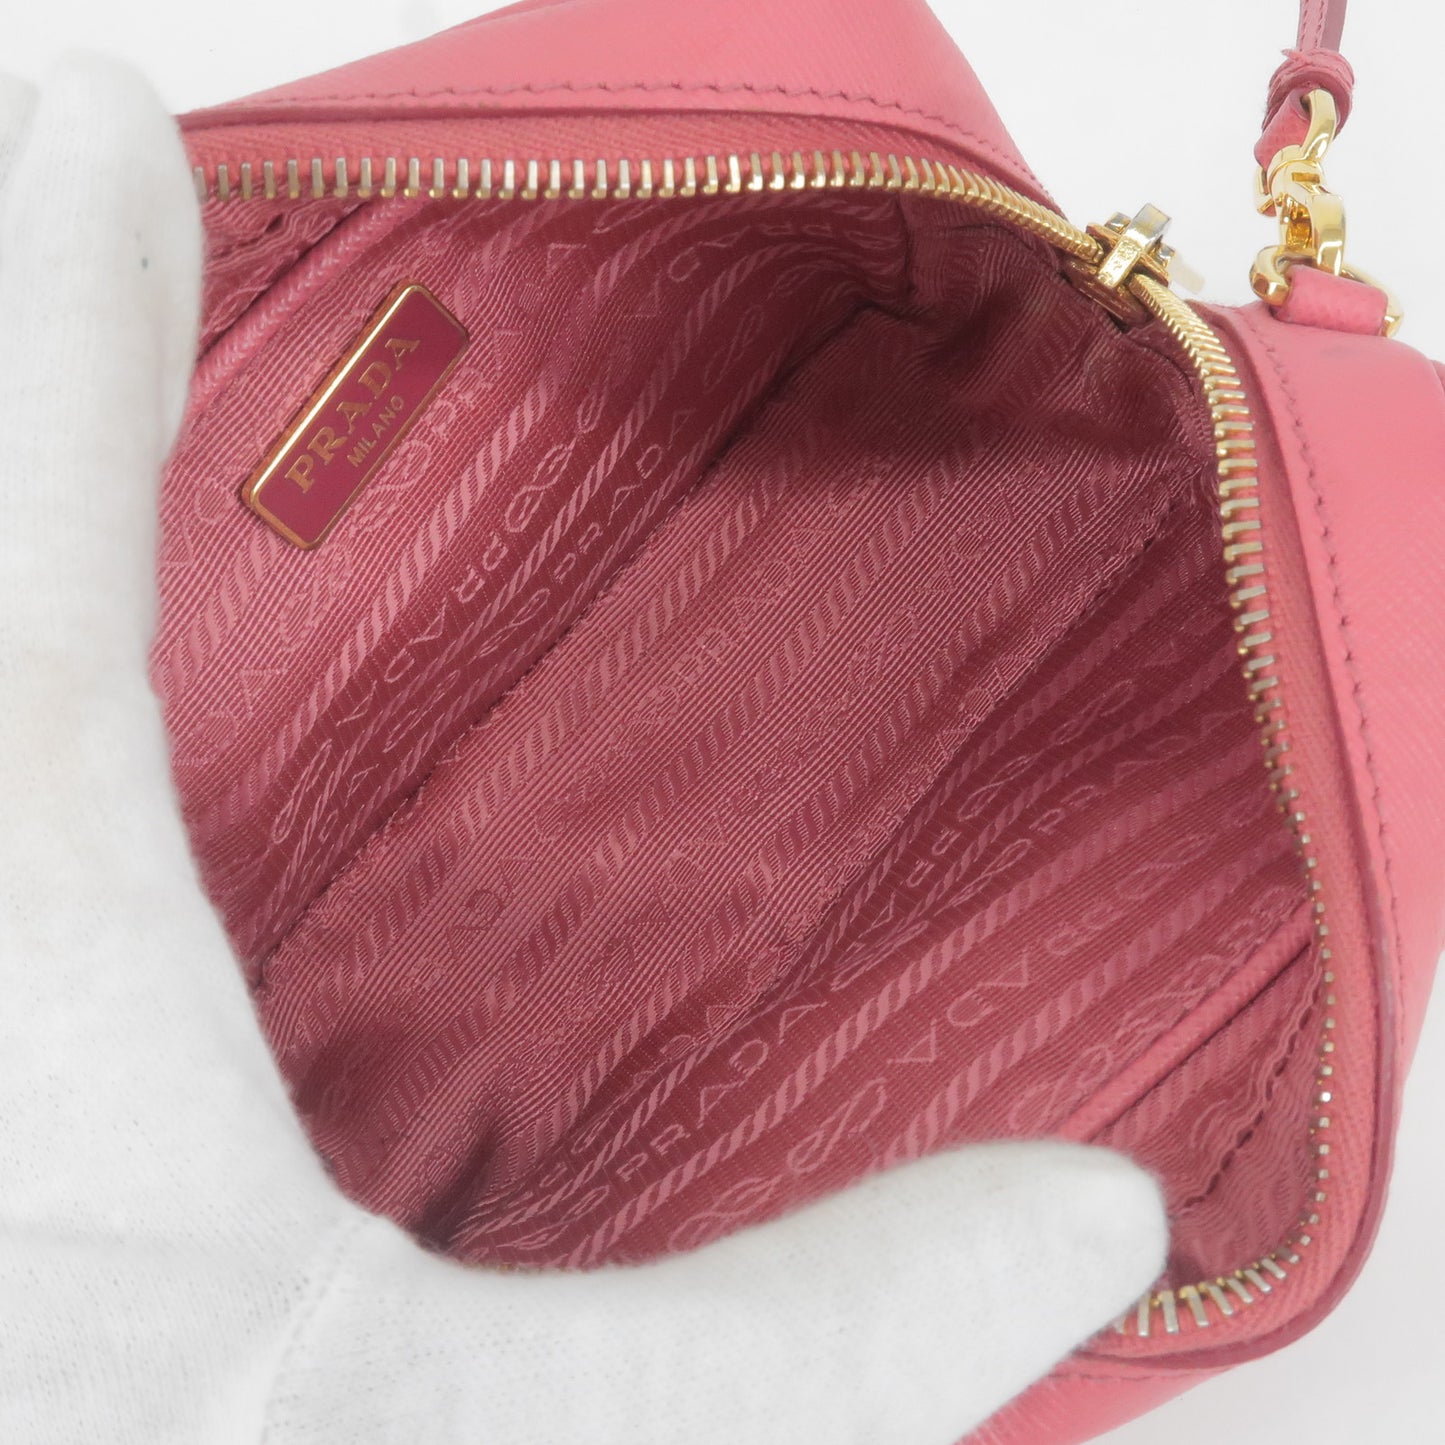 PRADA Bow Ribbon Leather Shoulder Bag Purse Pink